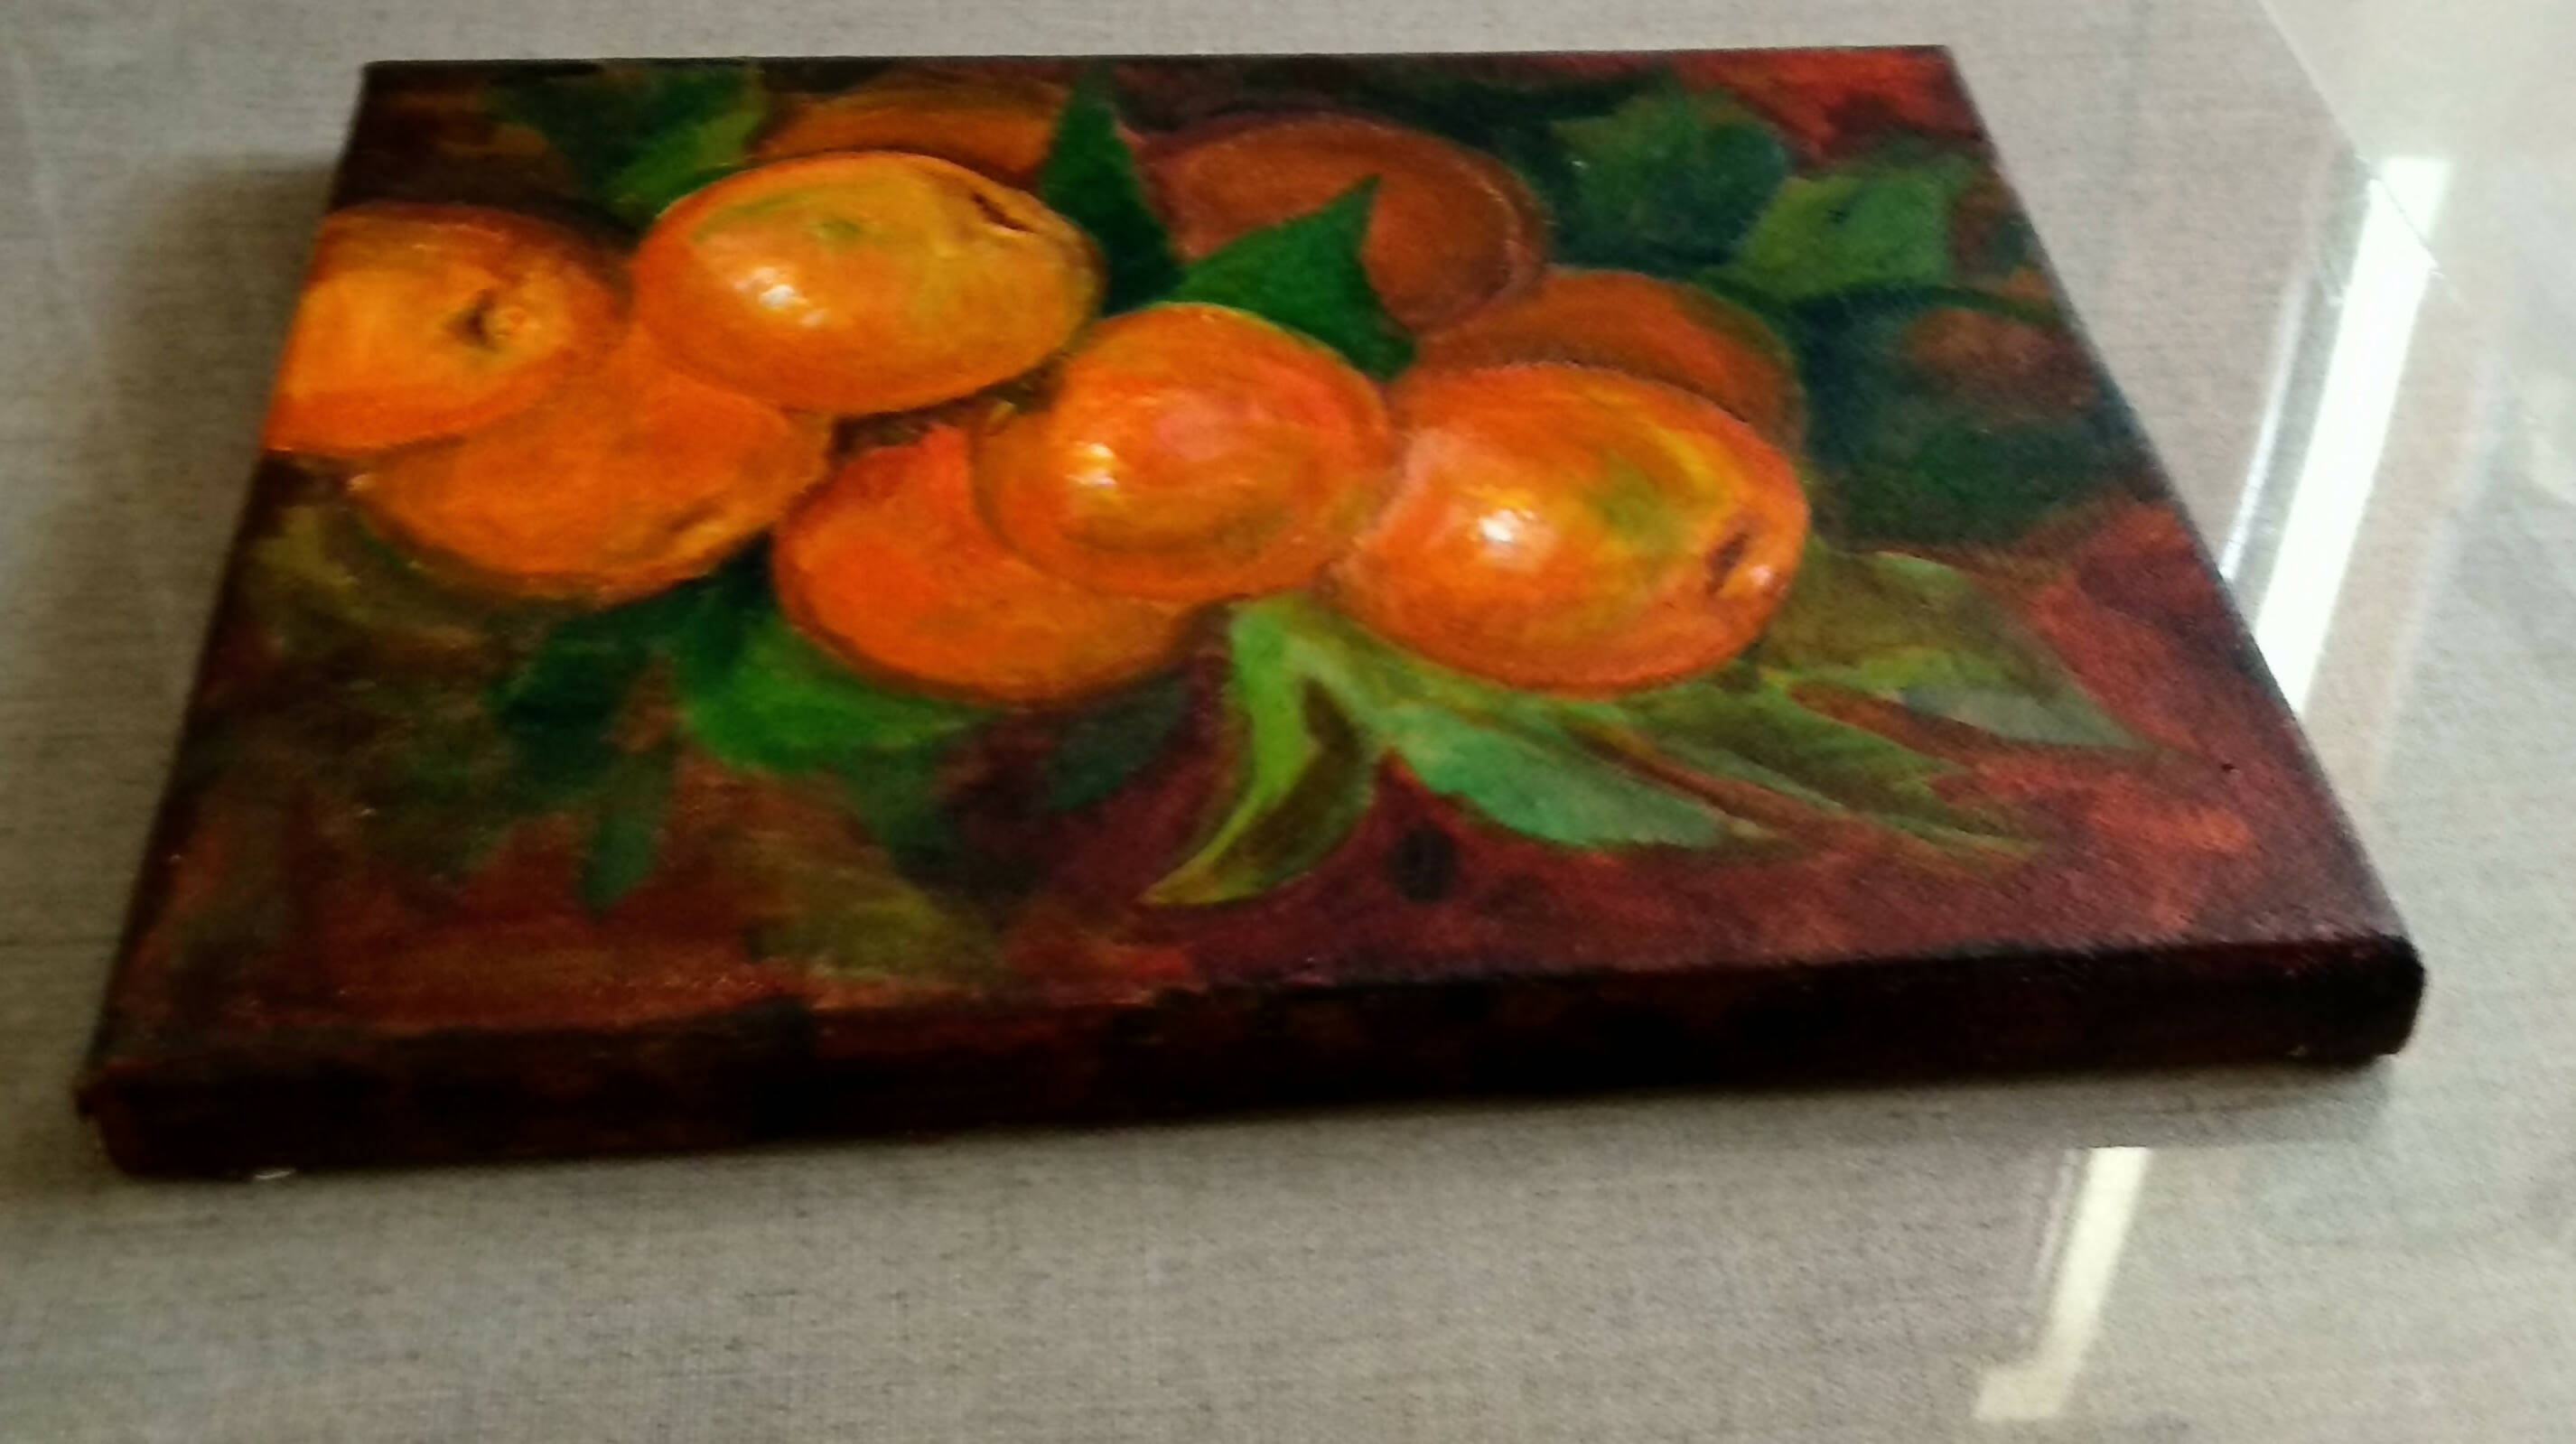 Oranges on a tree, Mandarin canvas painting